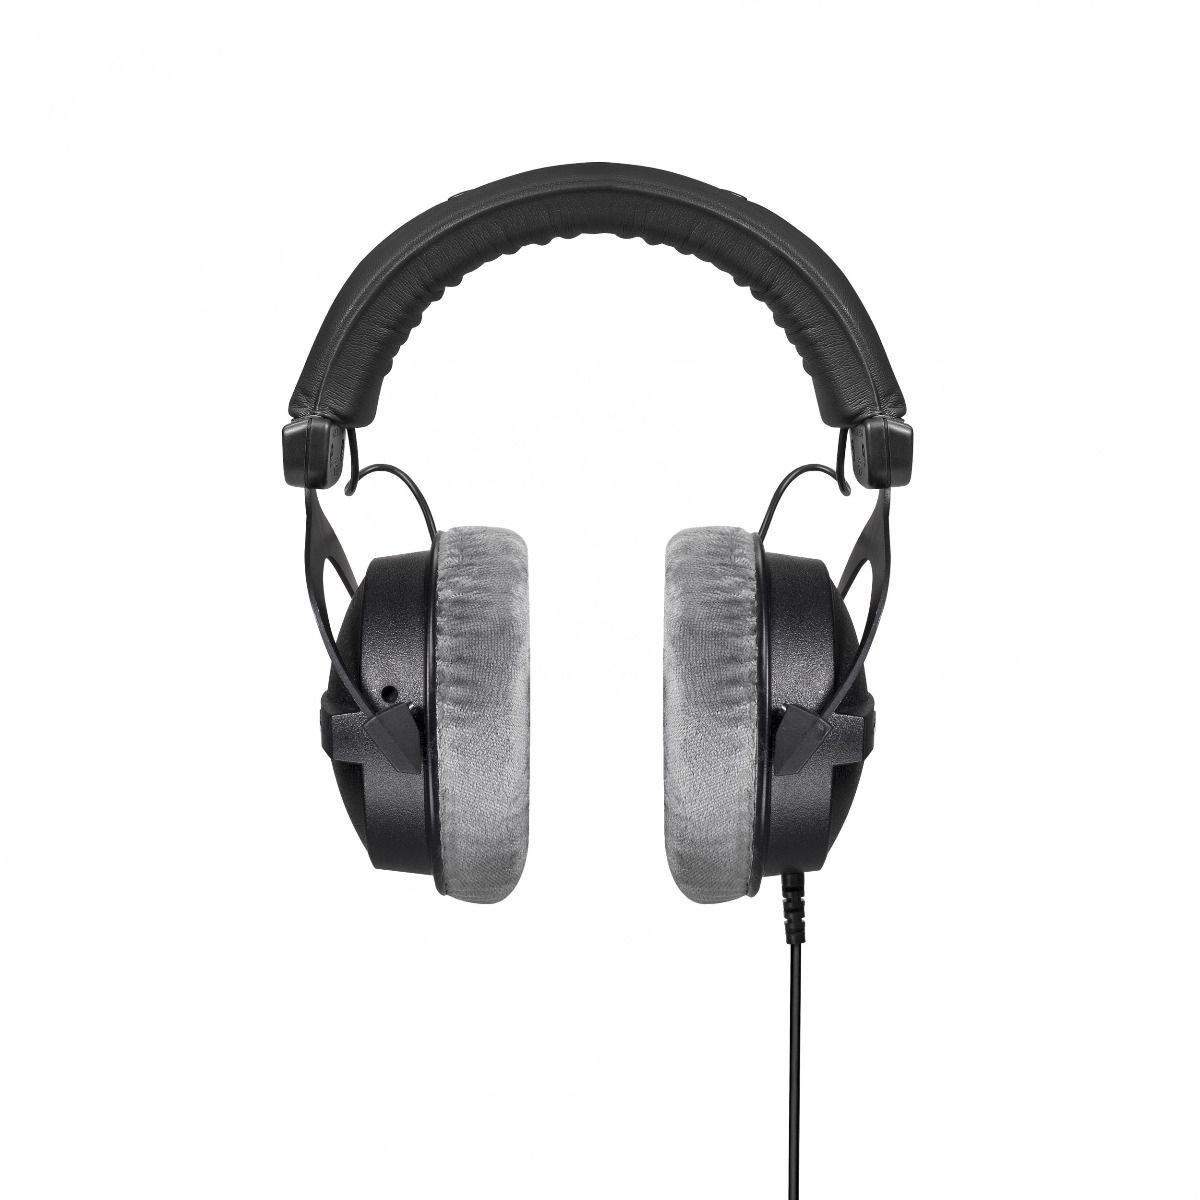 Beyerdynamic | DT 770 PRO 250 ohms | Reference headphones - Arachne Audio